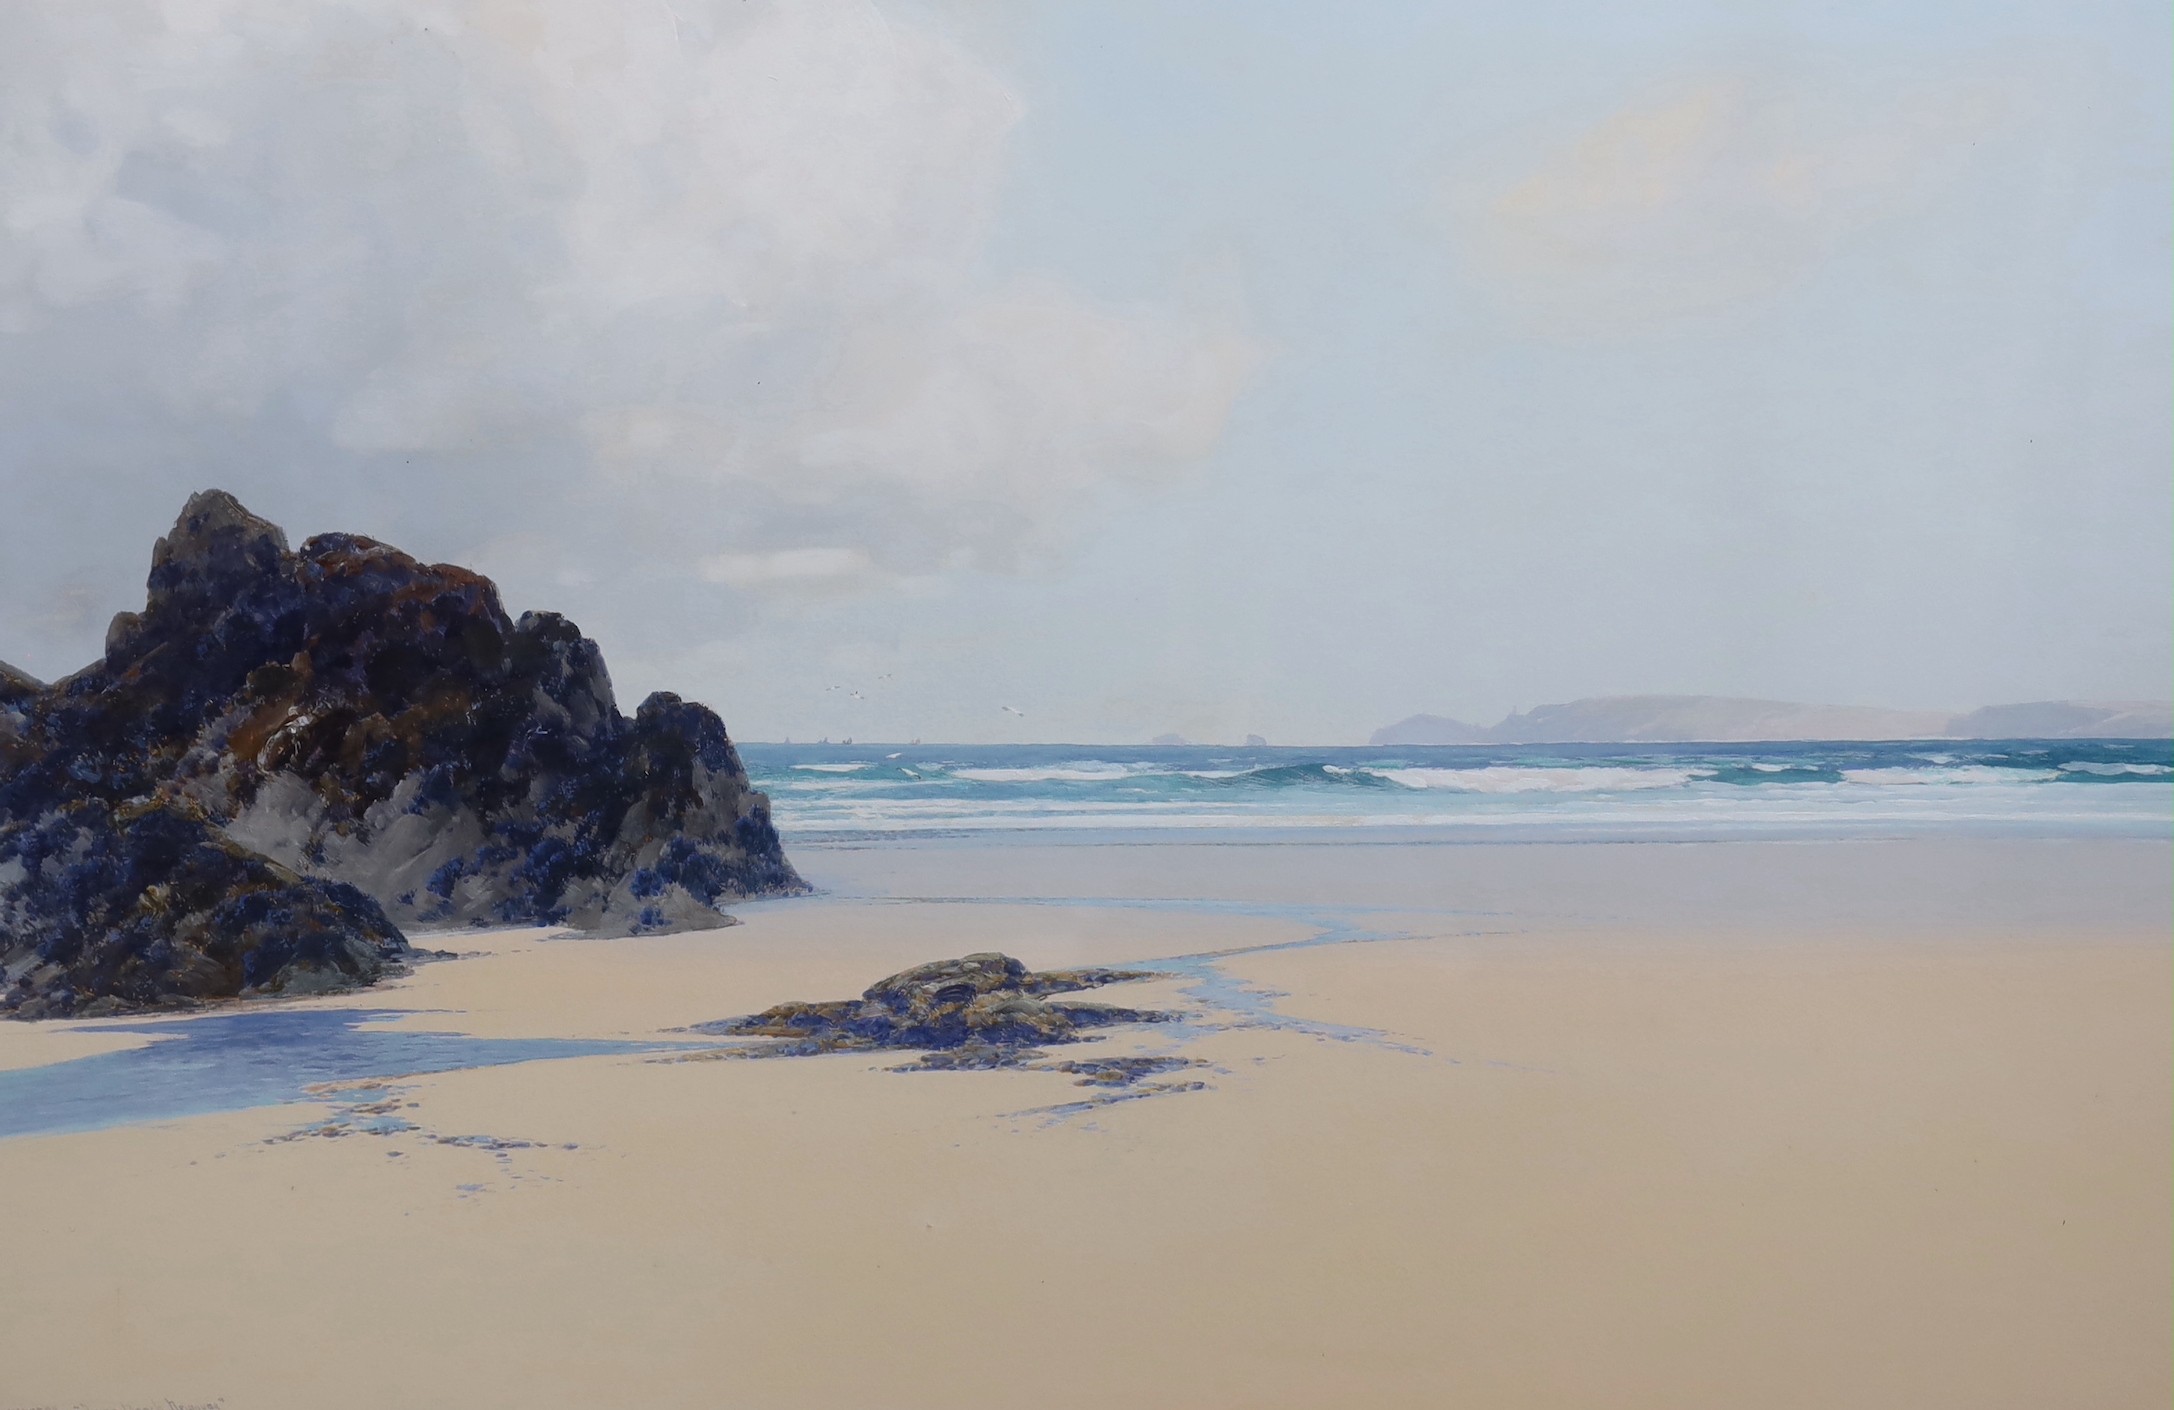 Frederick John Widgery (British, 1861-1942), 'Town Beach, Newquay' and 'Cornish beach scene', pair of gouaches on paper, 59 x 90cm